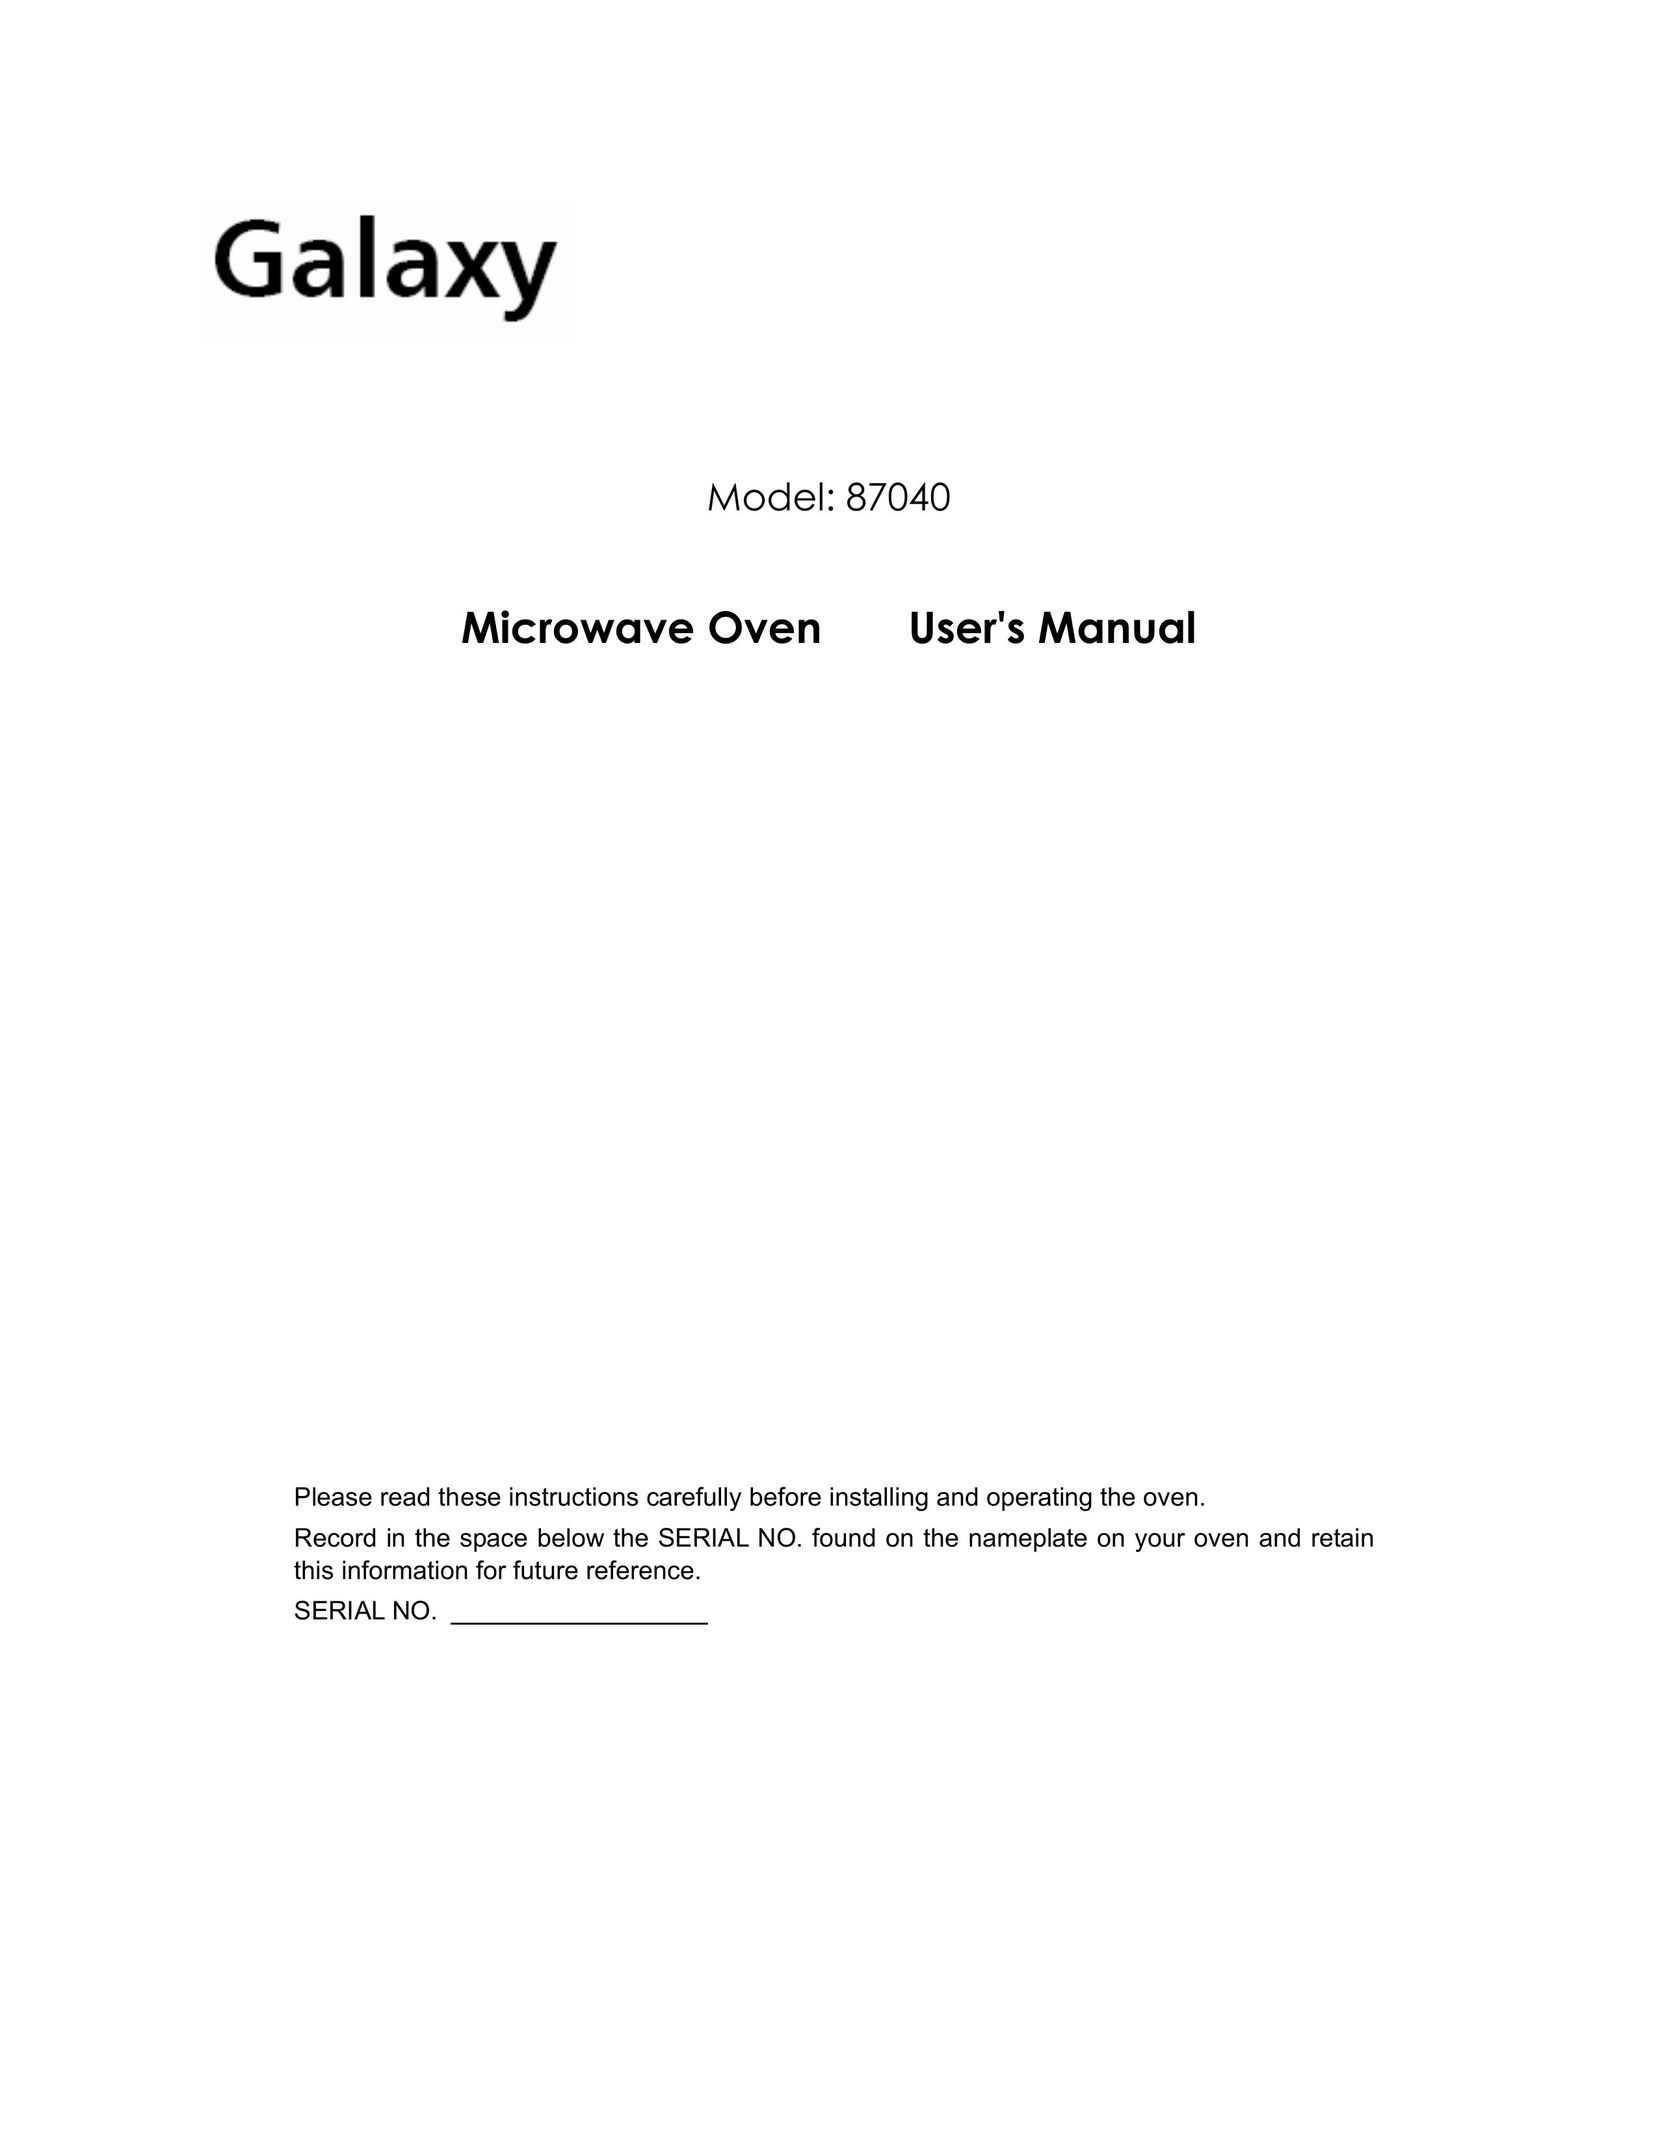 Galaxy Metal Gear 87040 Microwave Oven User Manual